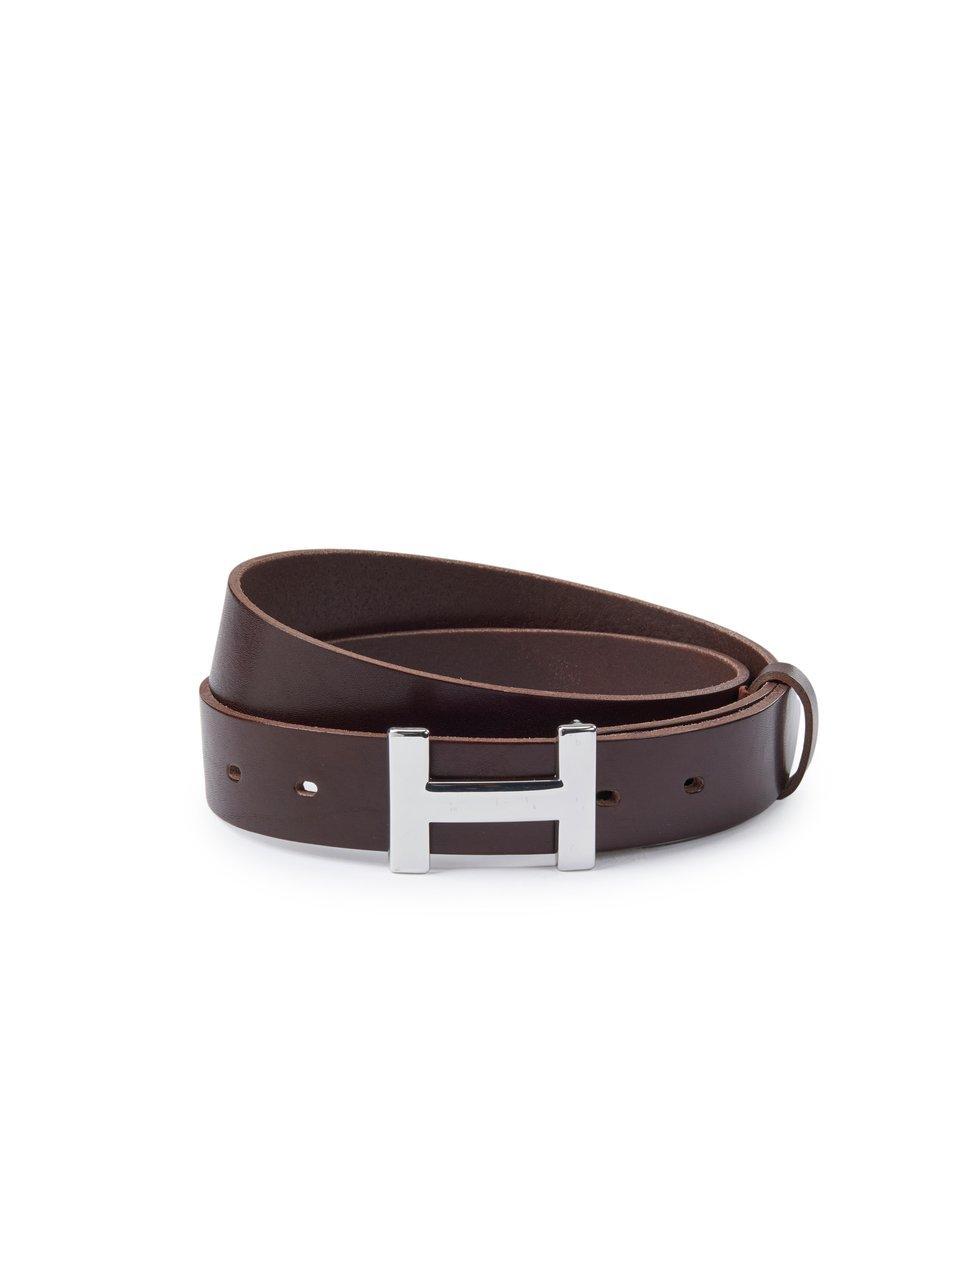 Vanzetti - Belt in full grain leather - brown/silver